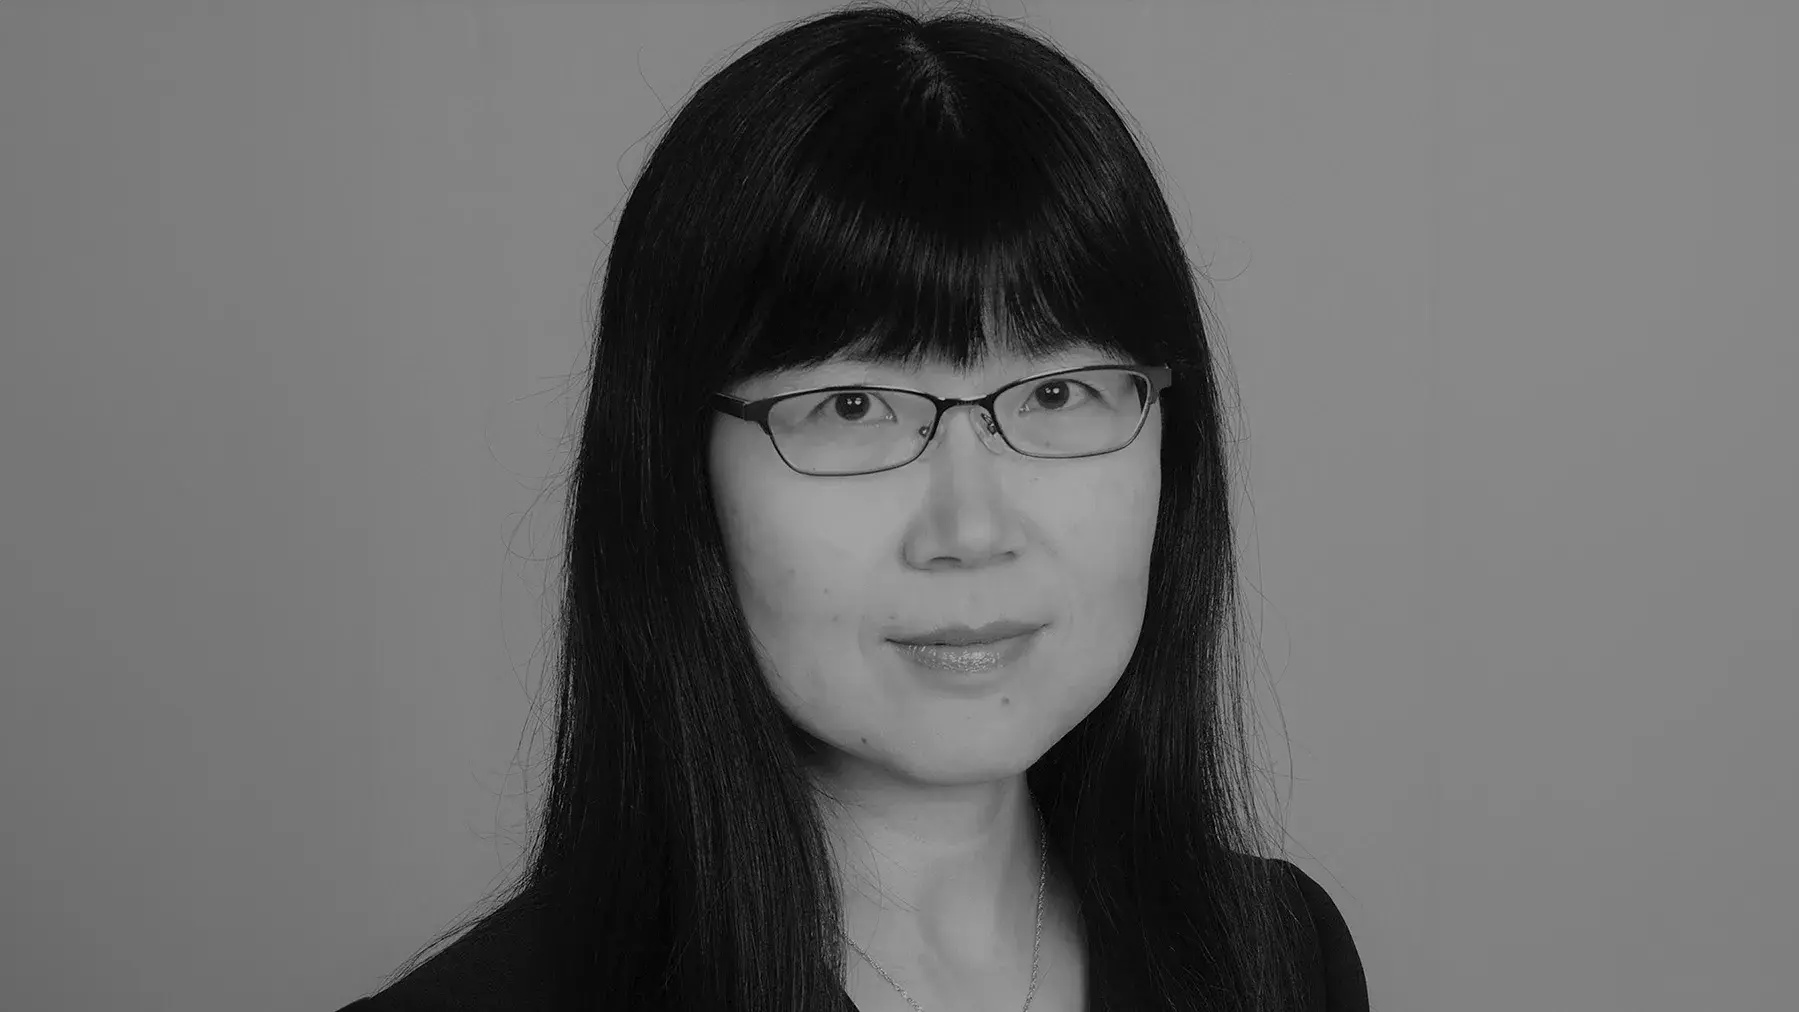 Lei Cao, PhD